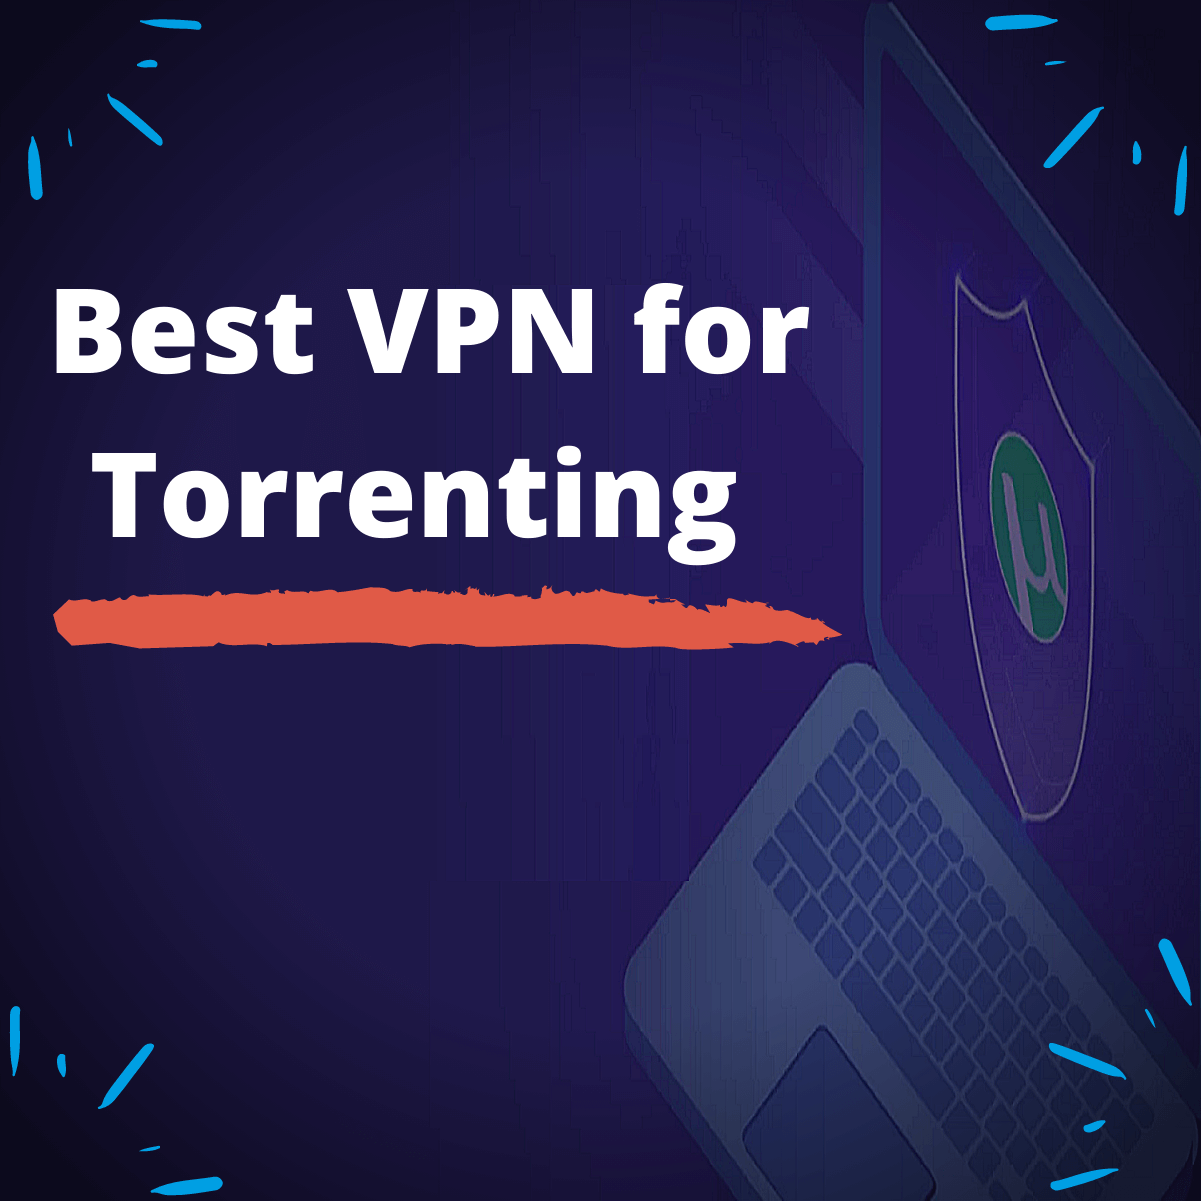 Top vpns for torrenting books redirect internet traffic through vpn software